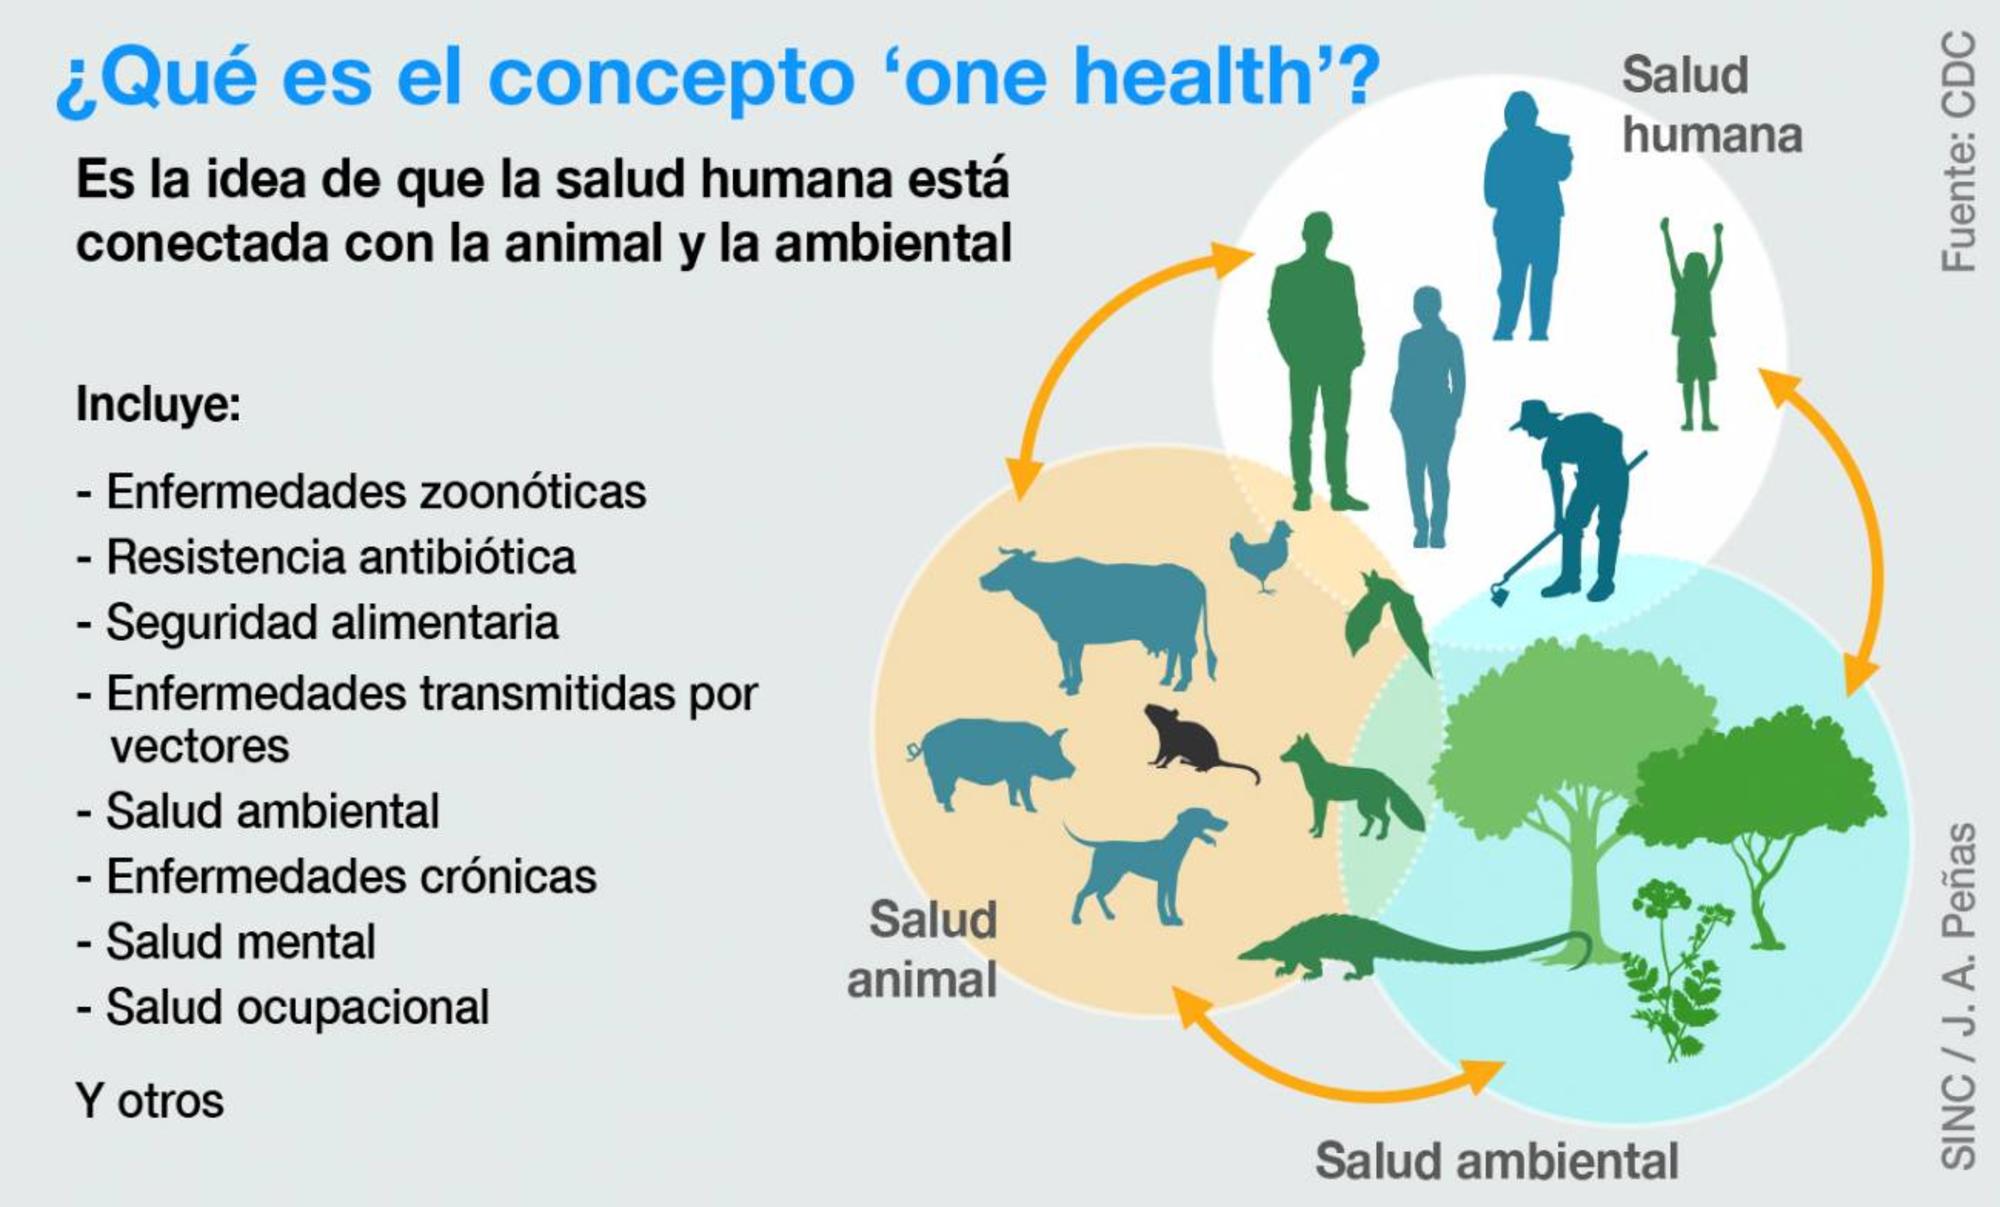 Concepto "one health"